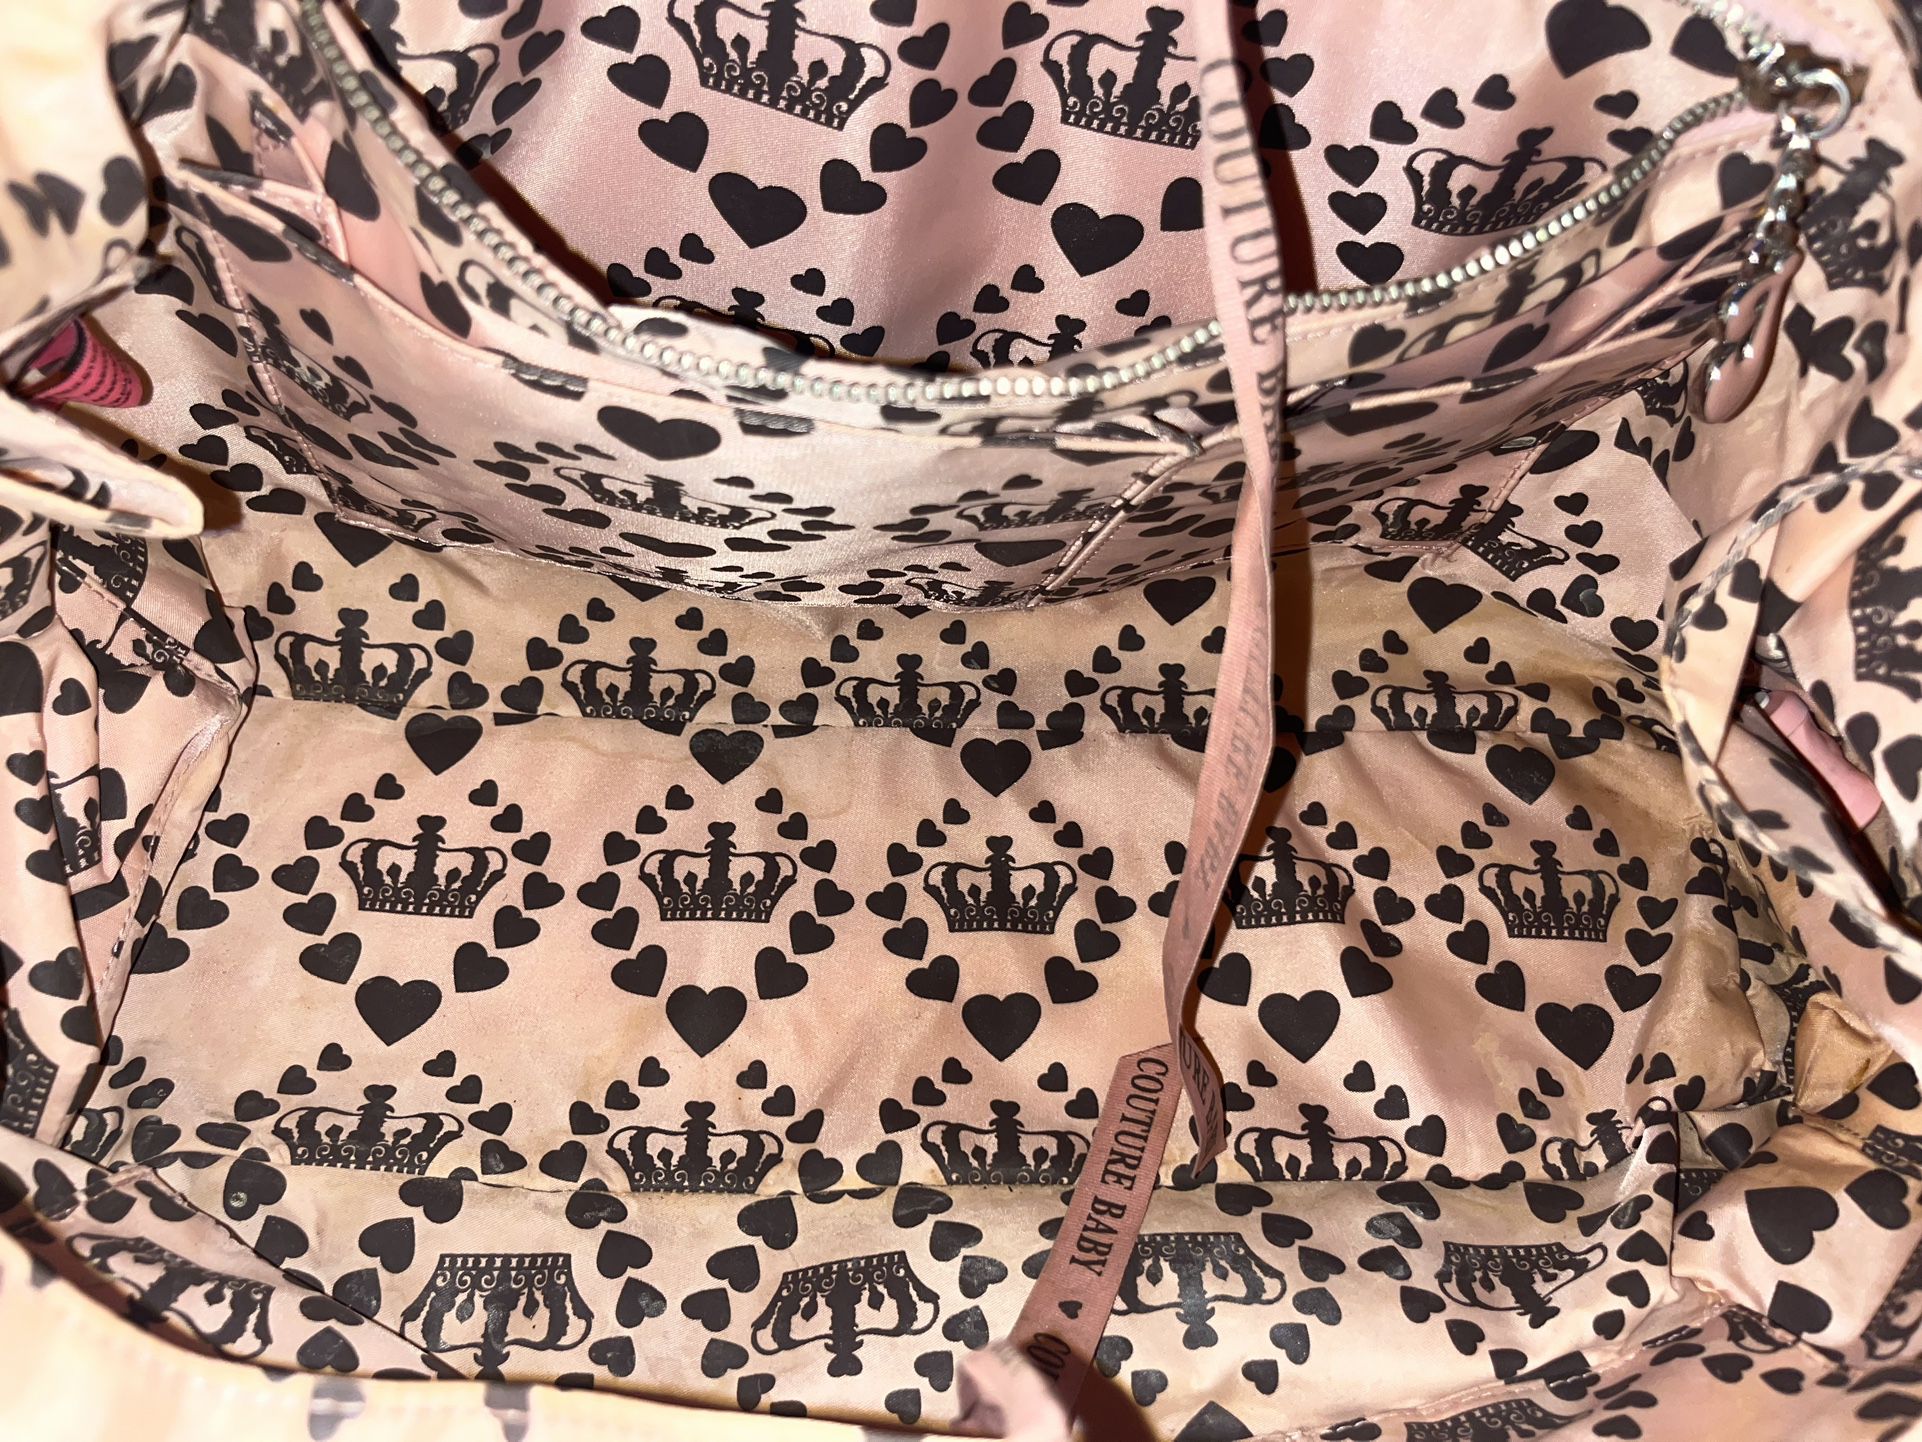 Juicy couture Diaper Bag